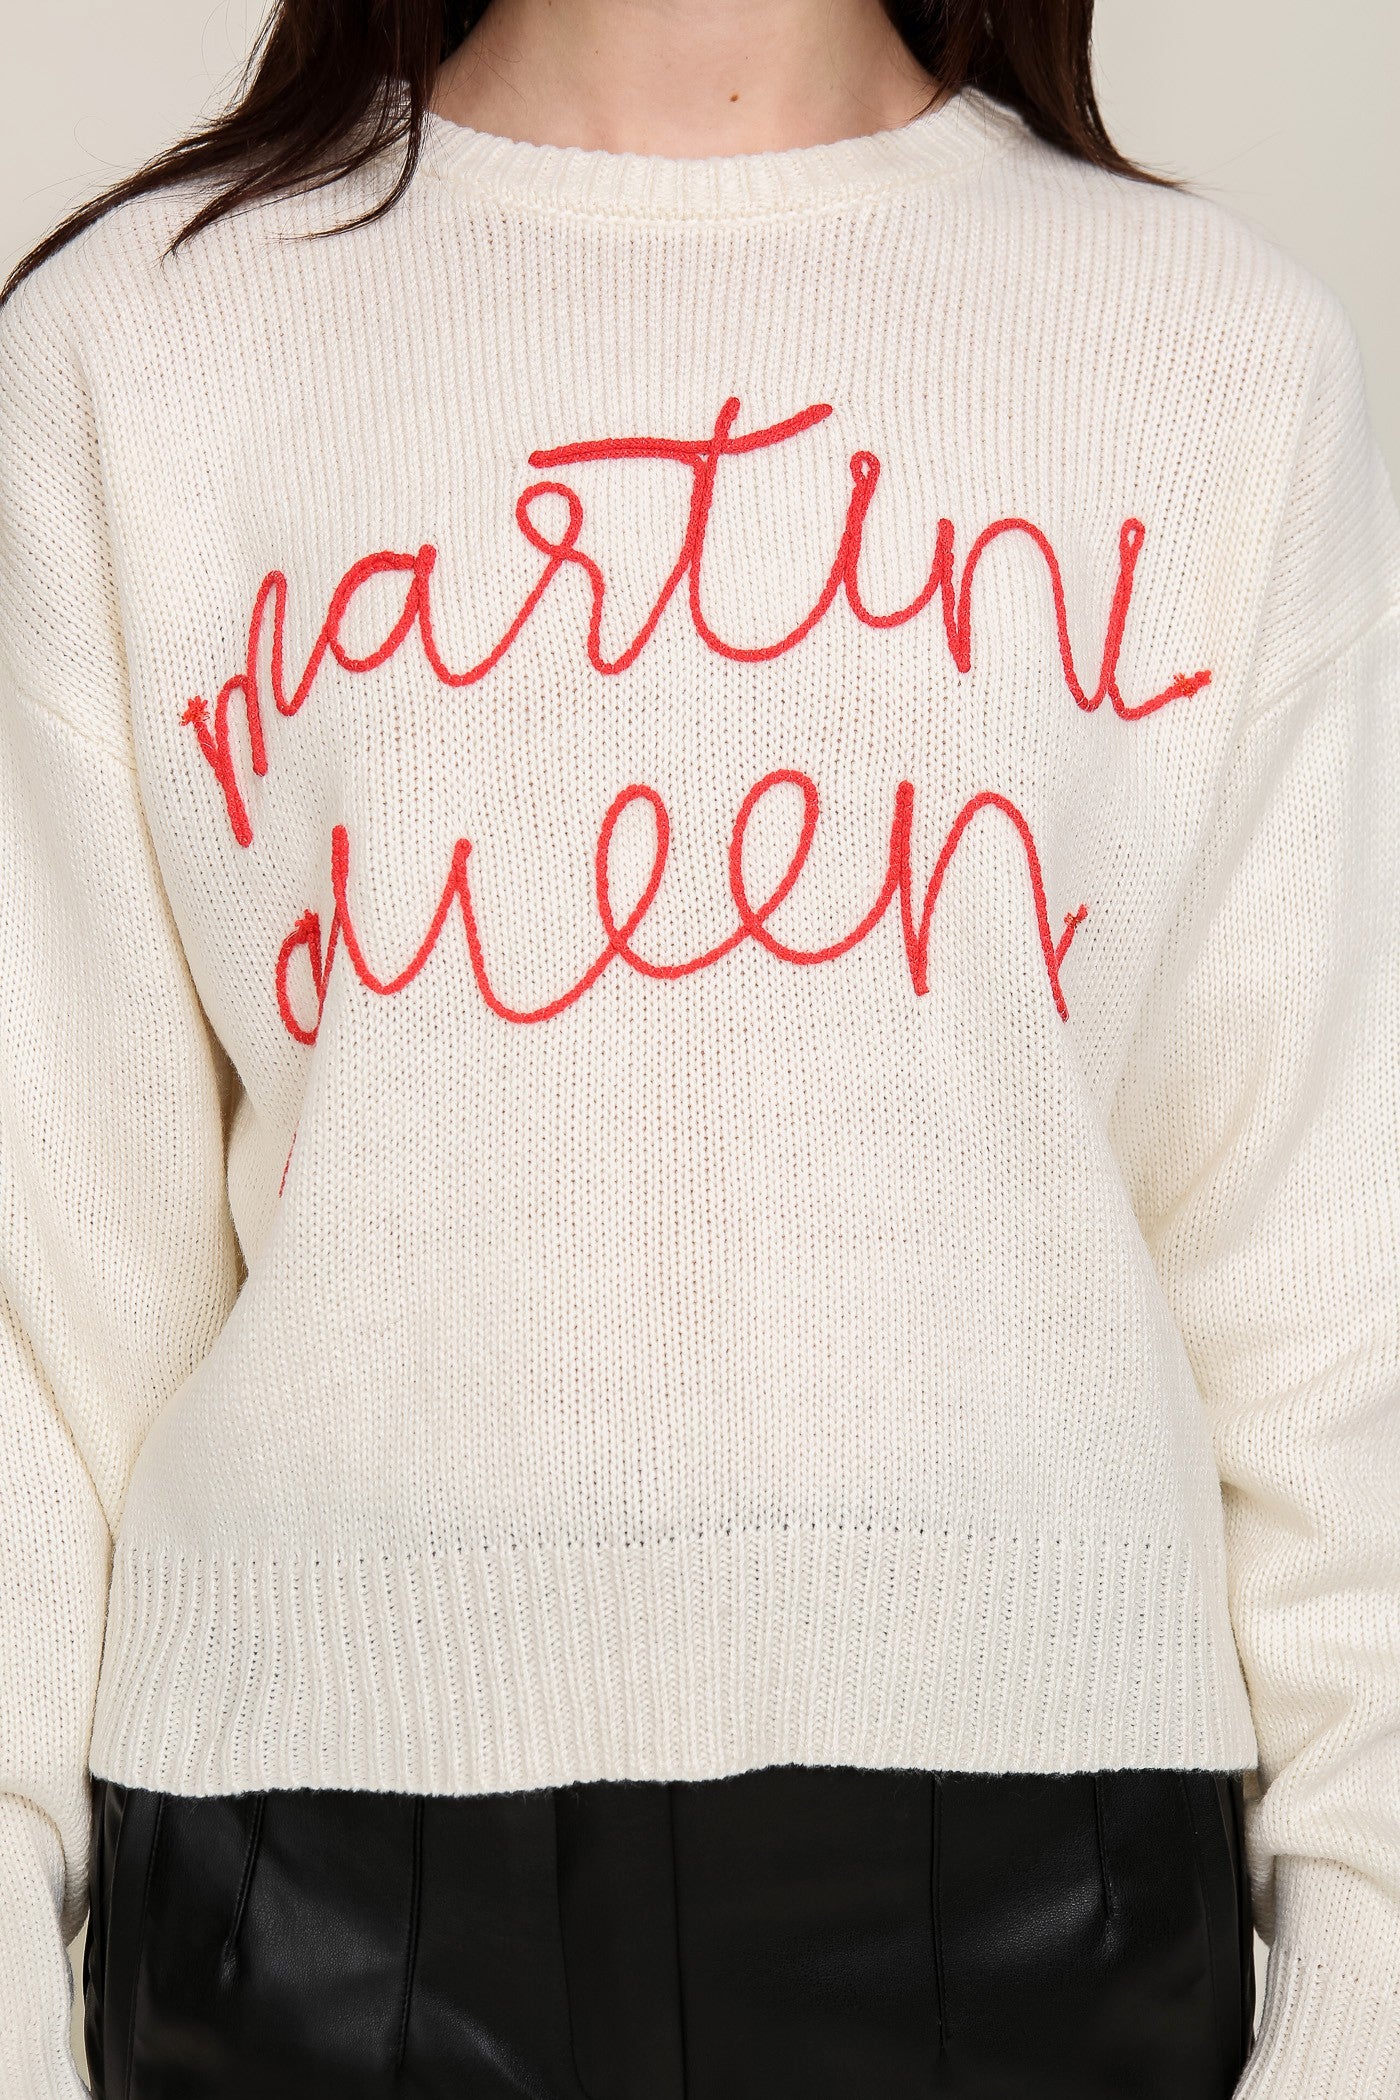 Martini Queen Sweater